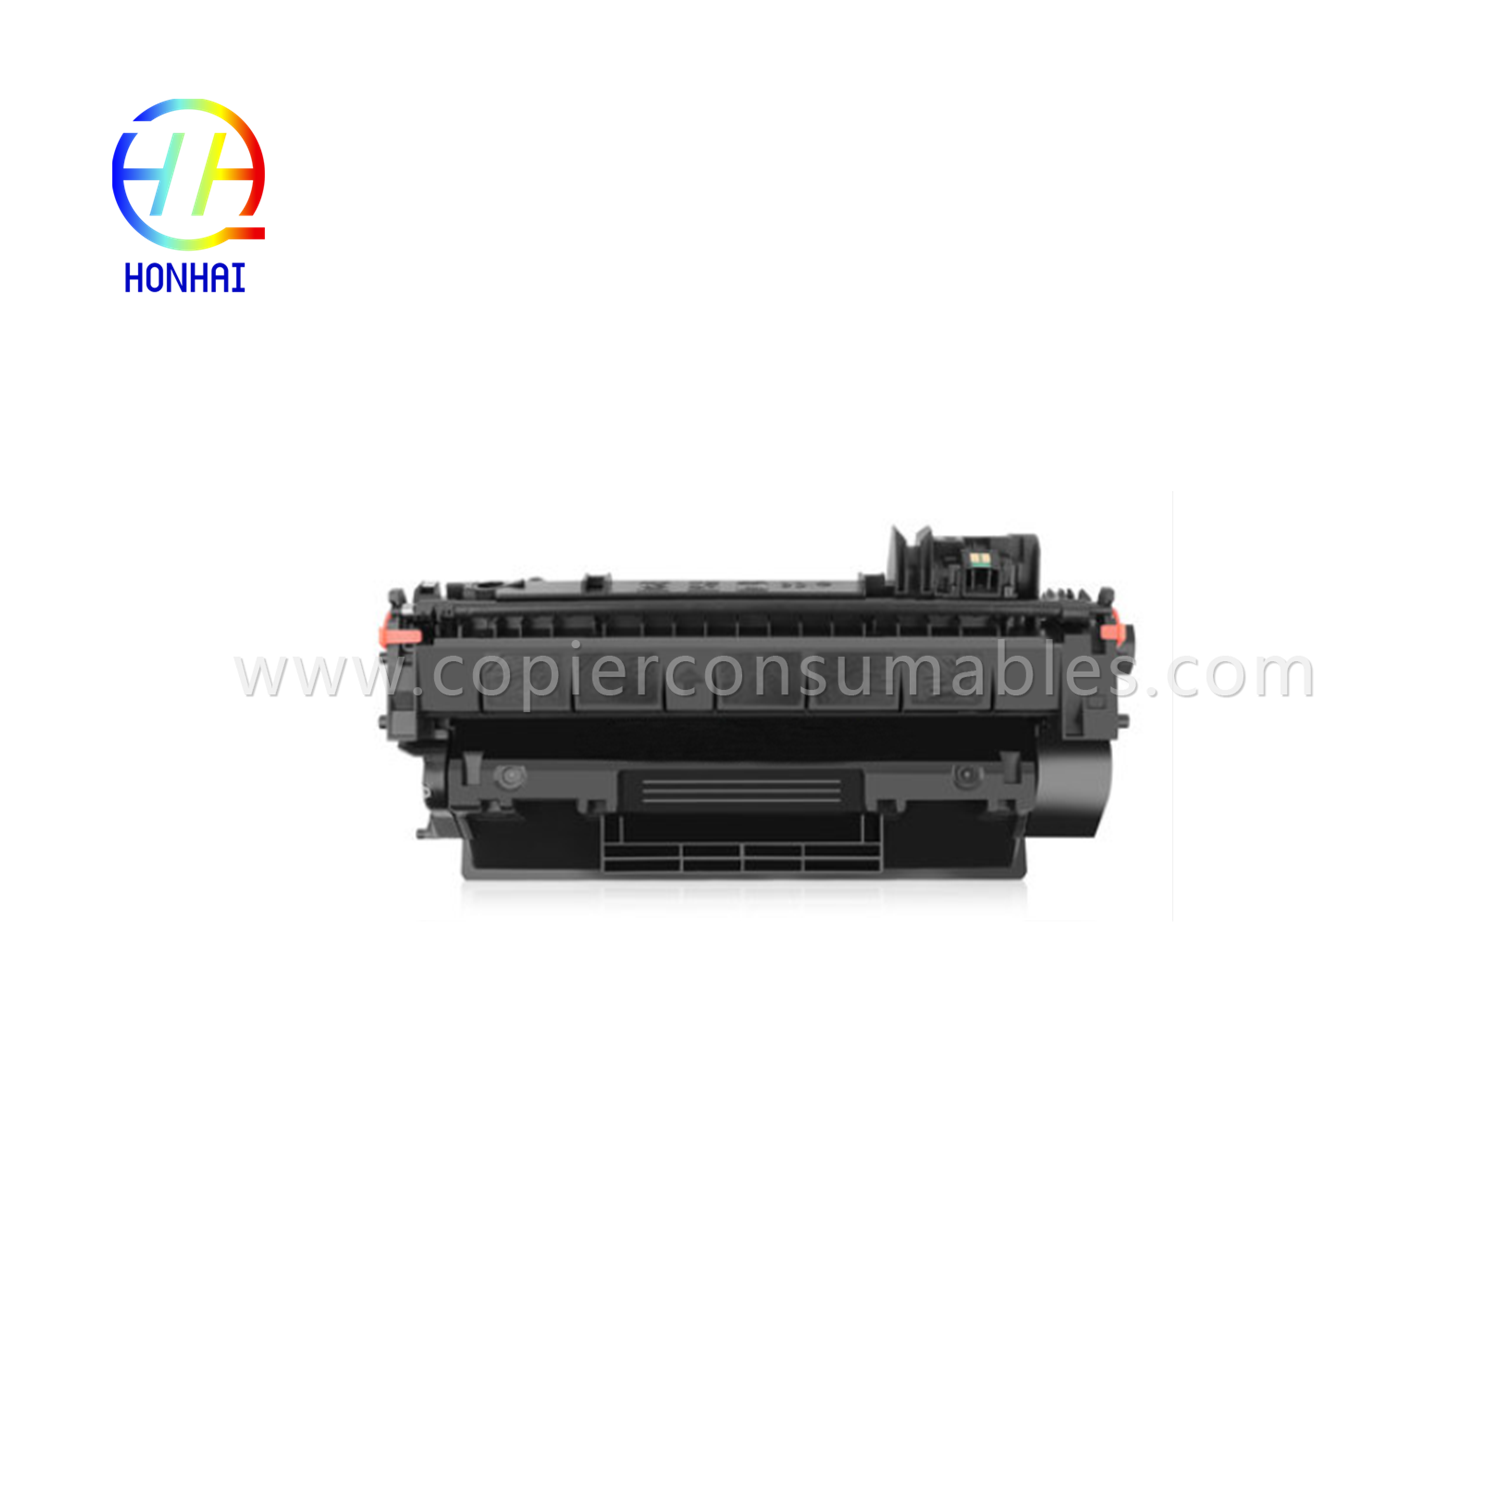 Toner Cartridge for HP P2035 HP05A